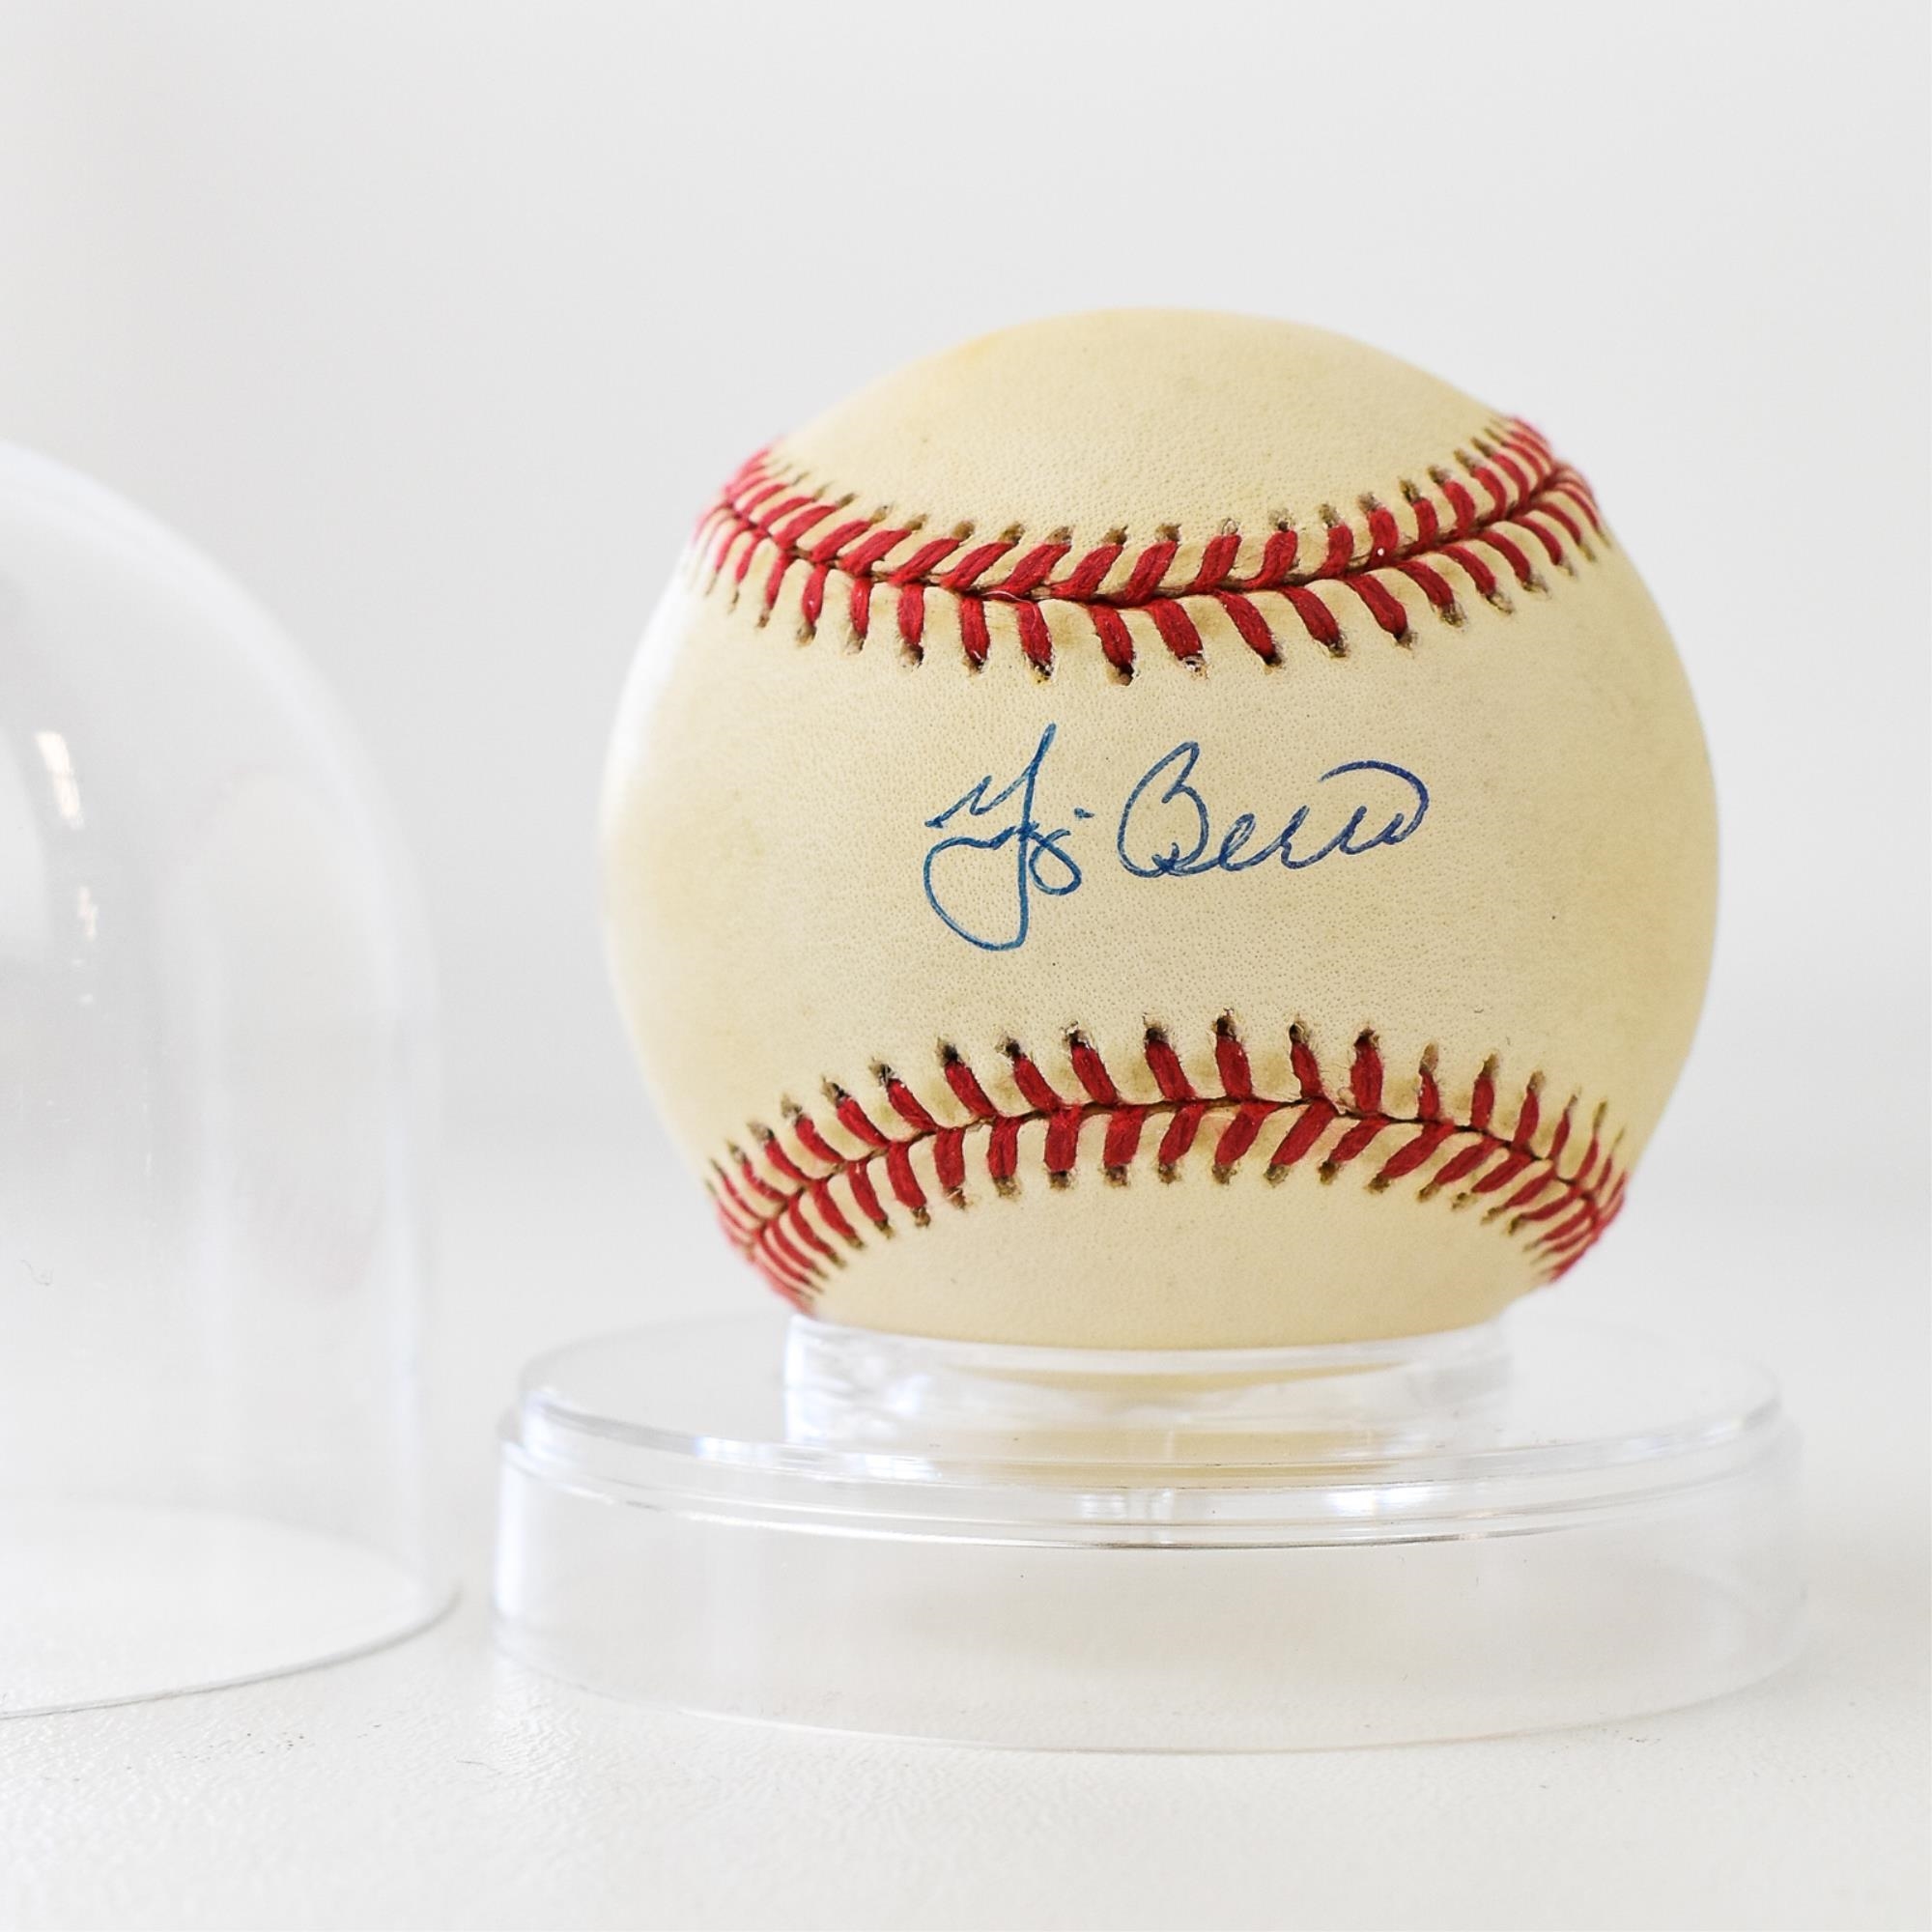 Lot - Yogi Berra Autographed Baseball, PSA/DNA